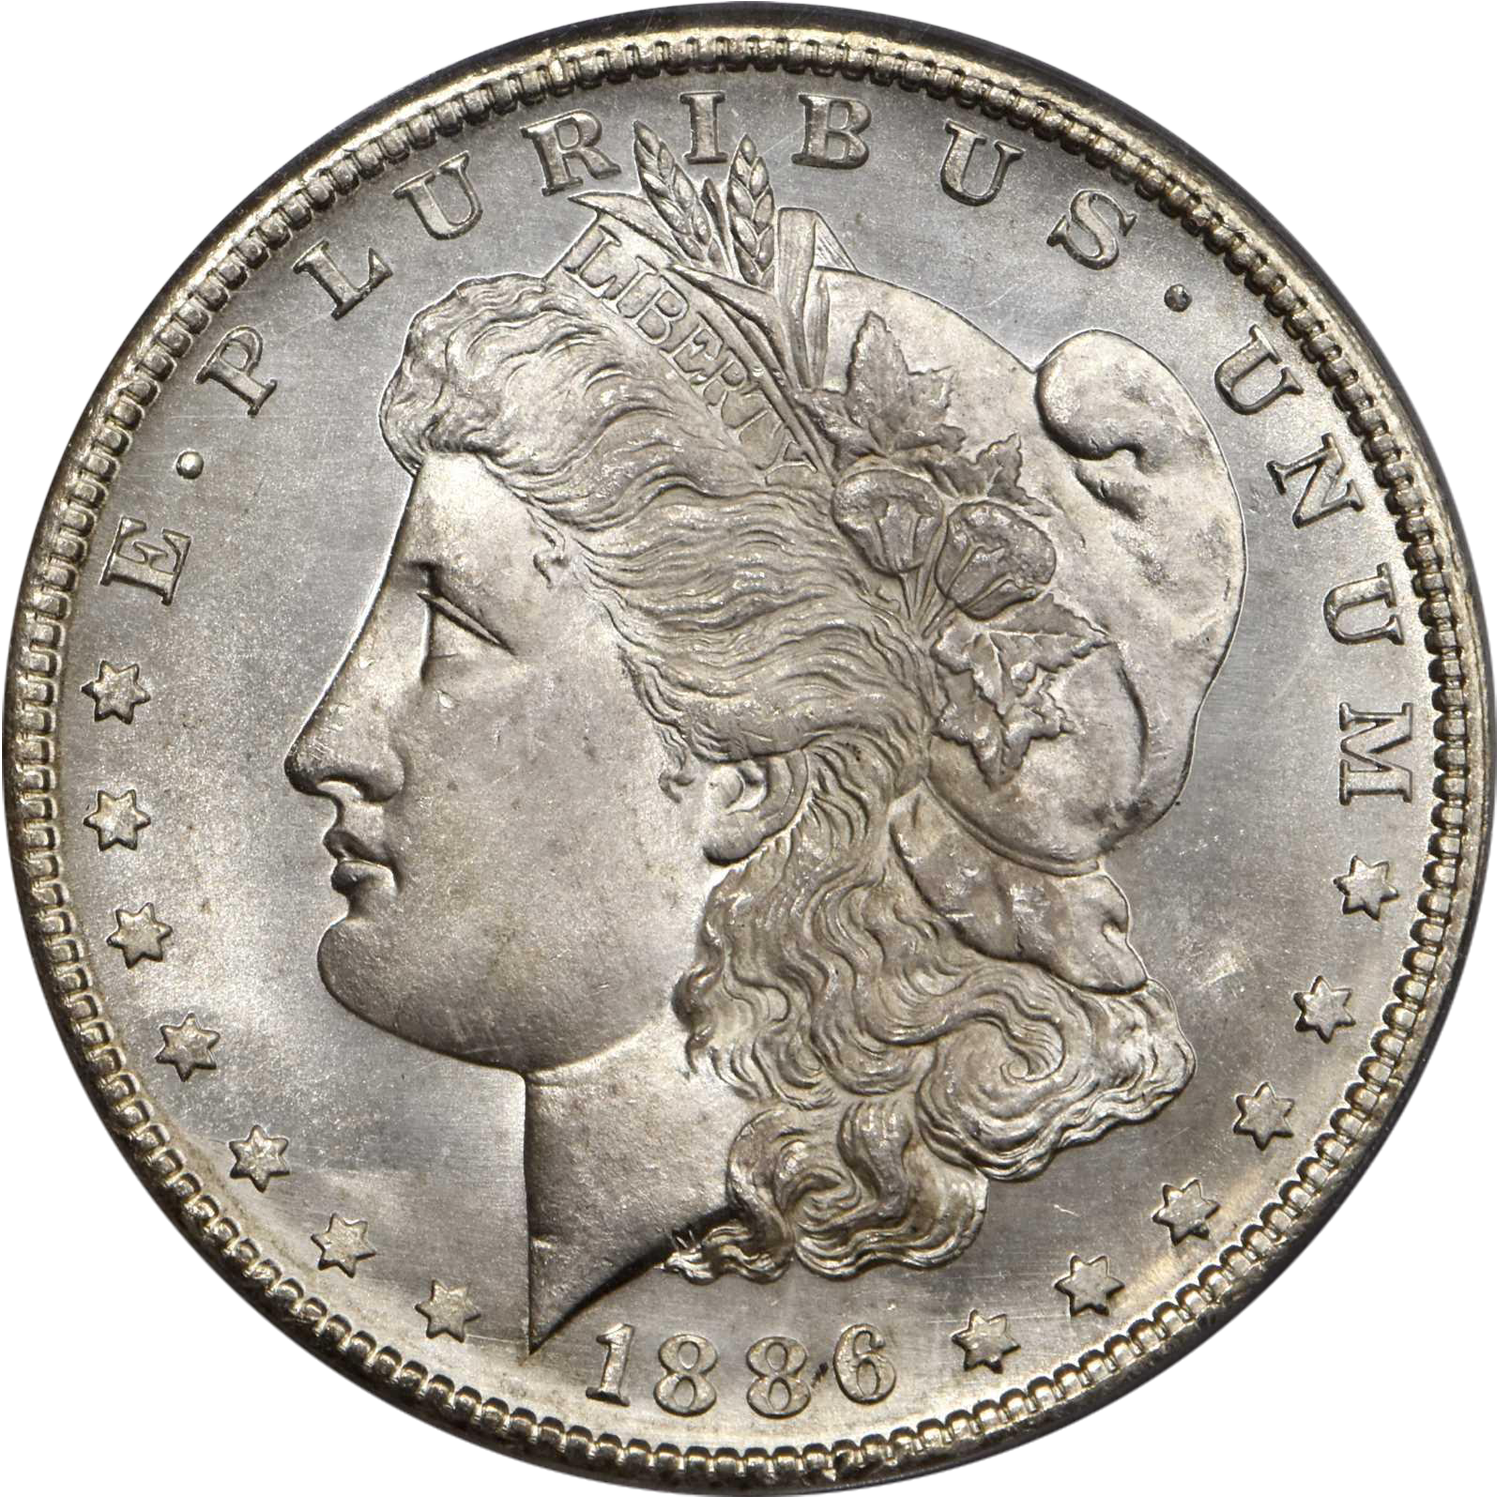 1886 s morgan silver dollar